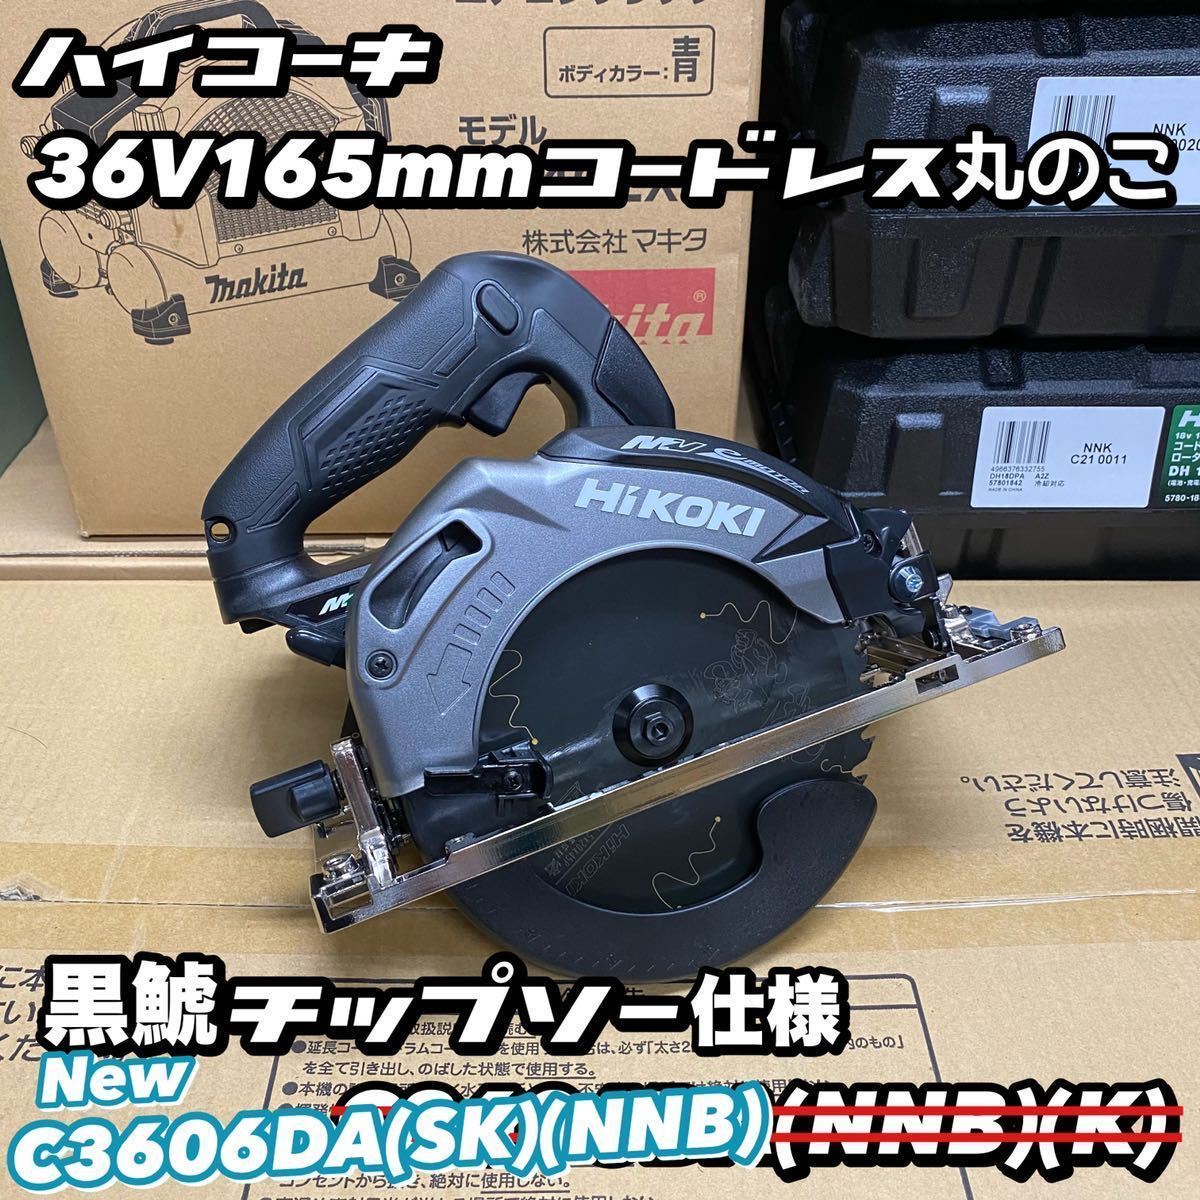 HiKOKI ハイコーキ 36V165mm コードレス丸のこ C3606DA-